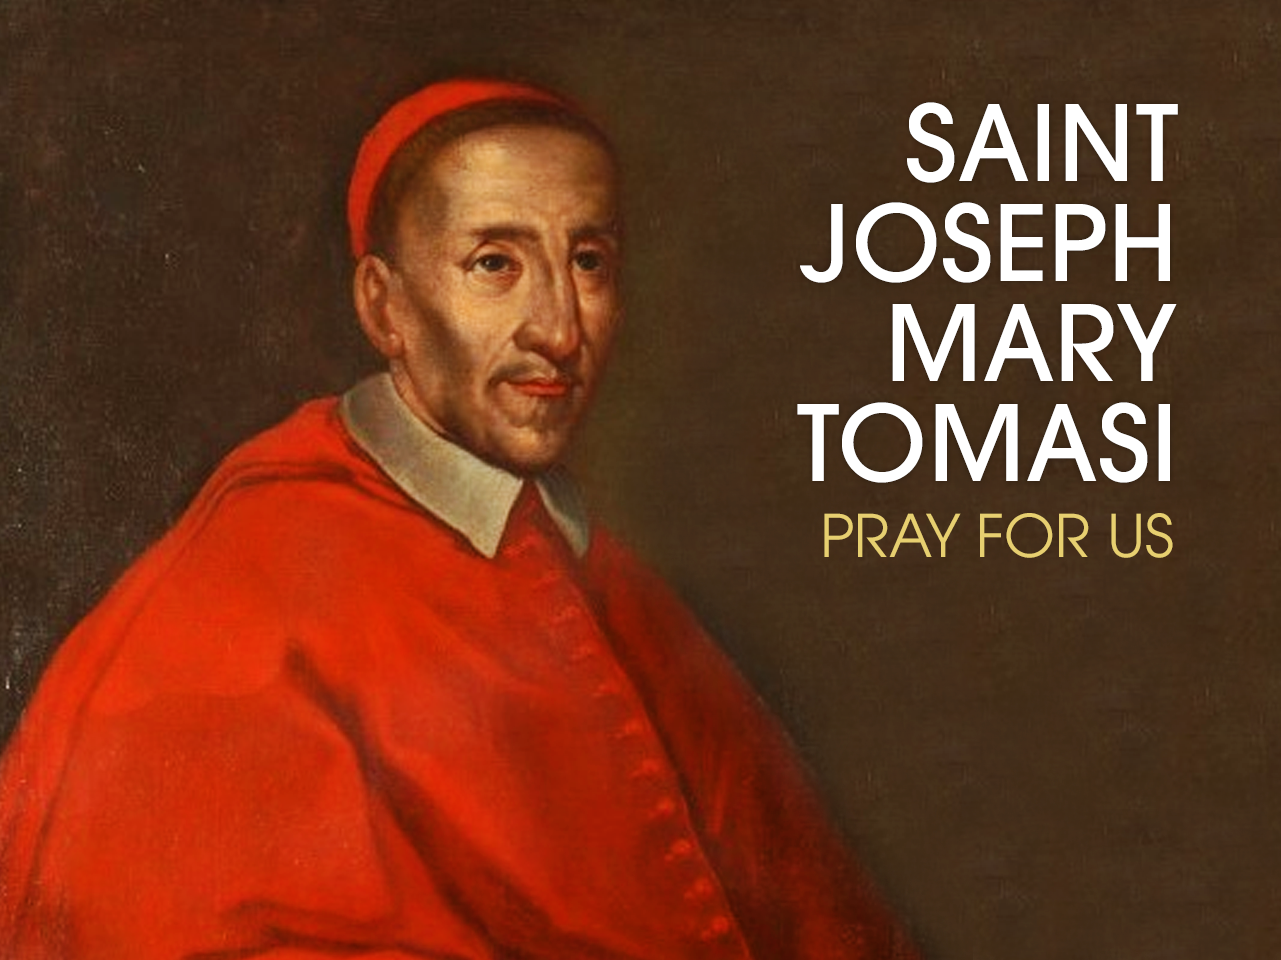 St. Joseph Mary Tomasi